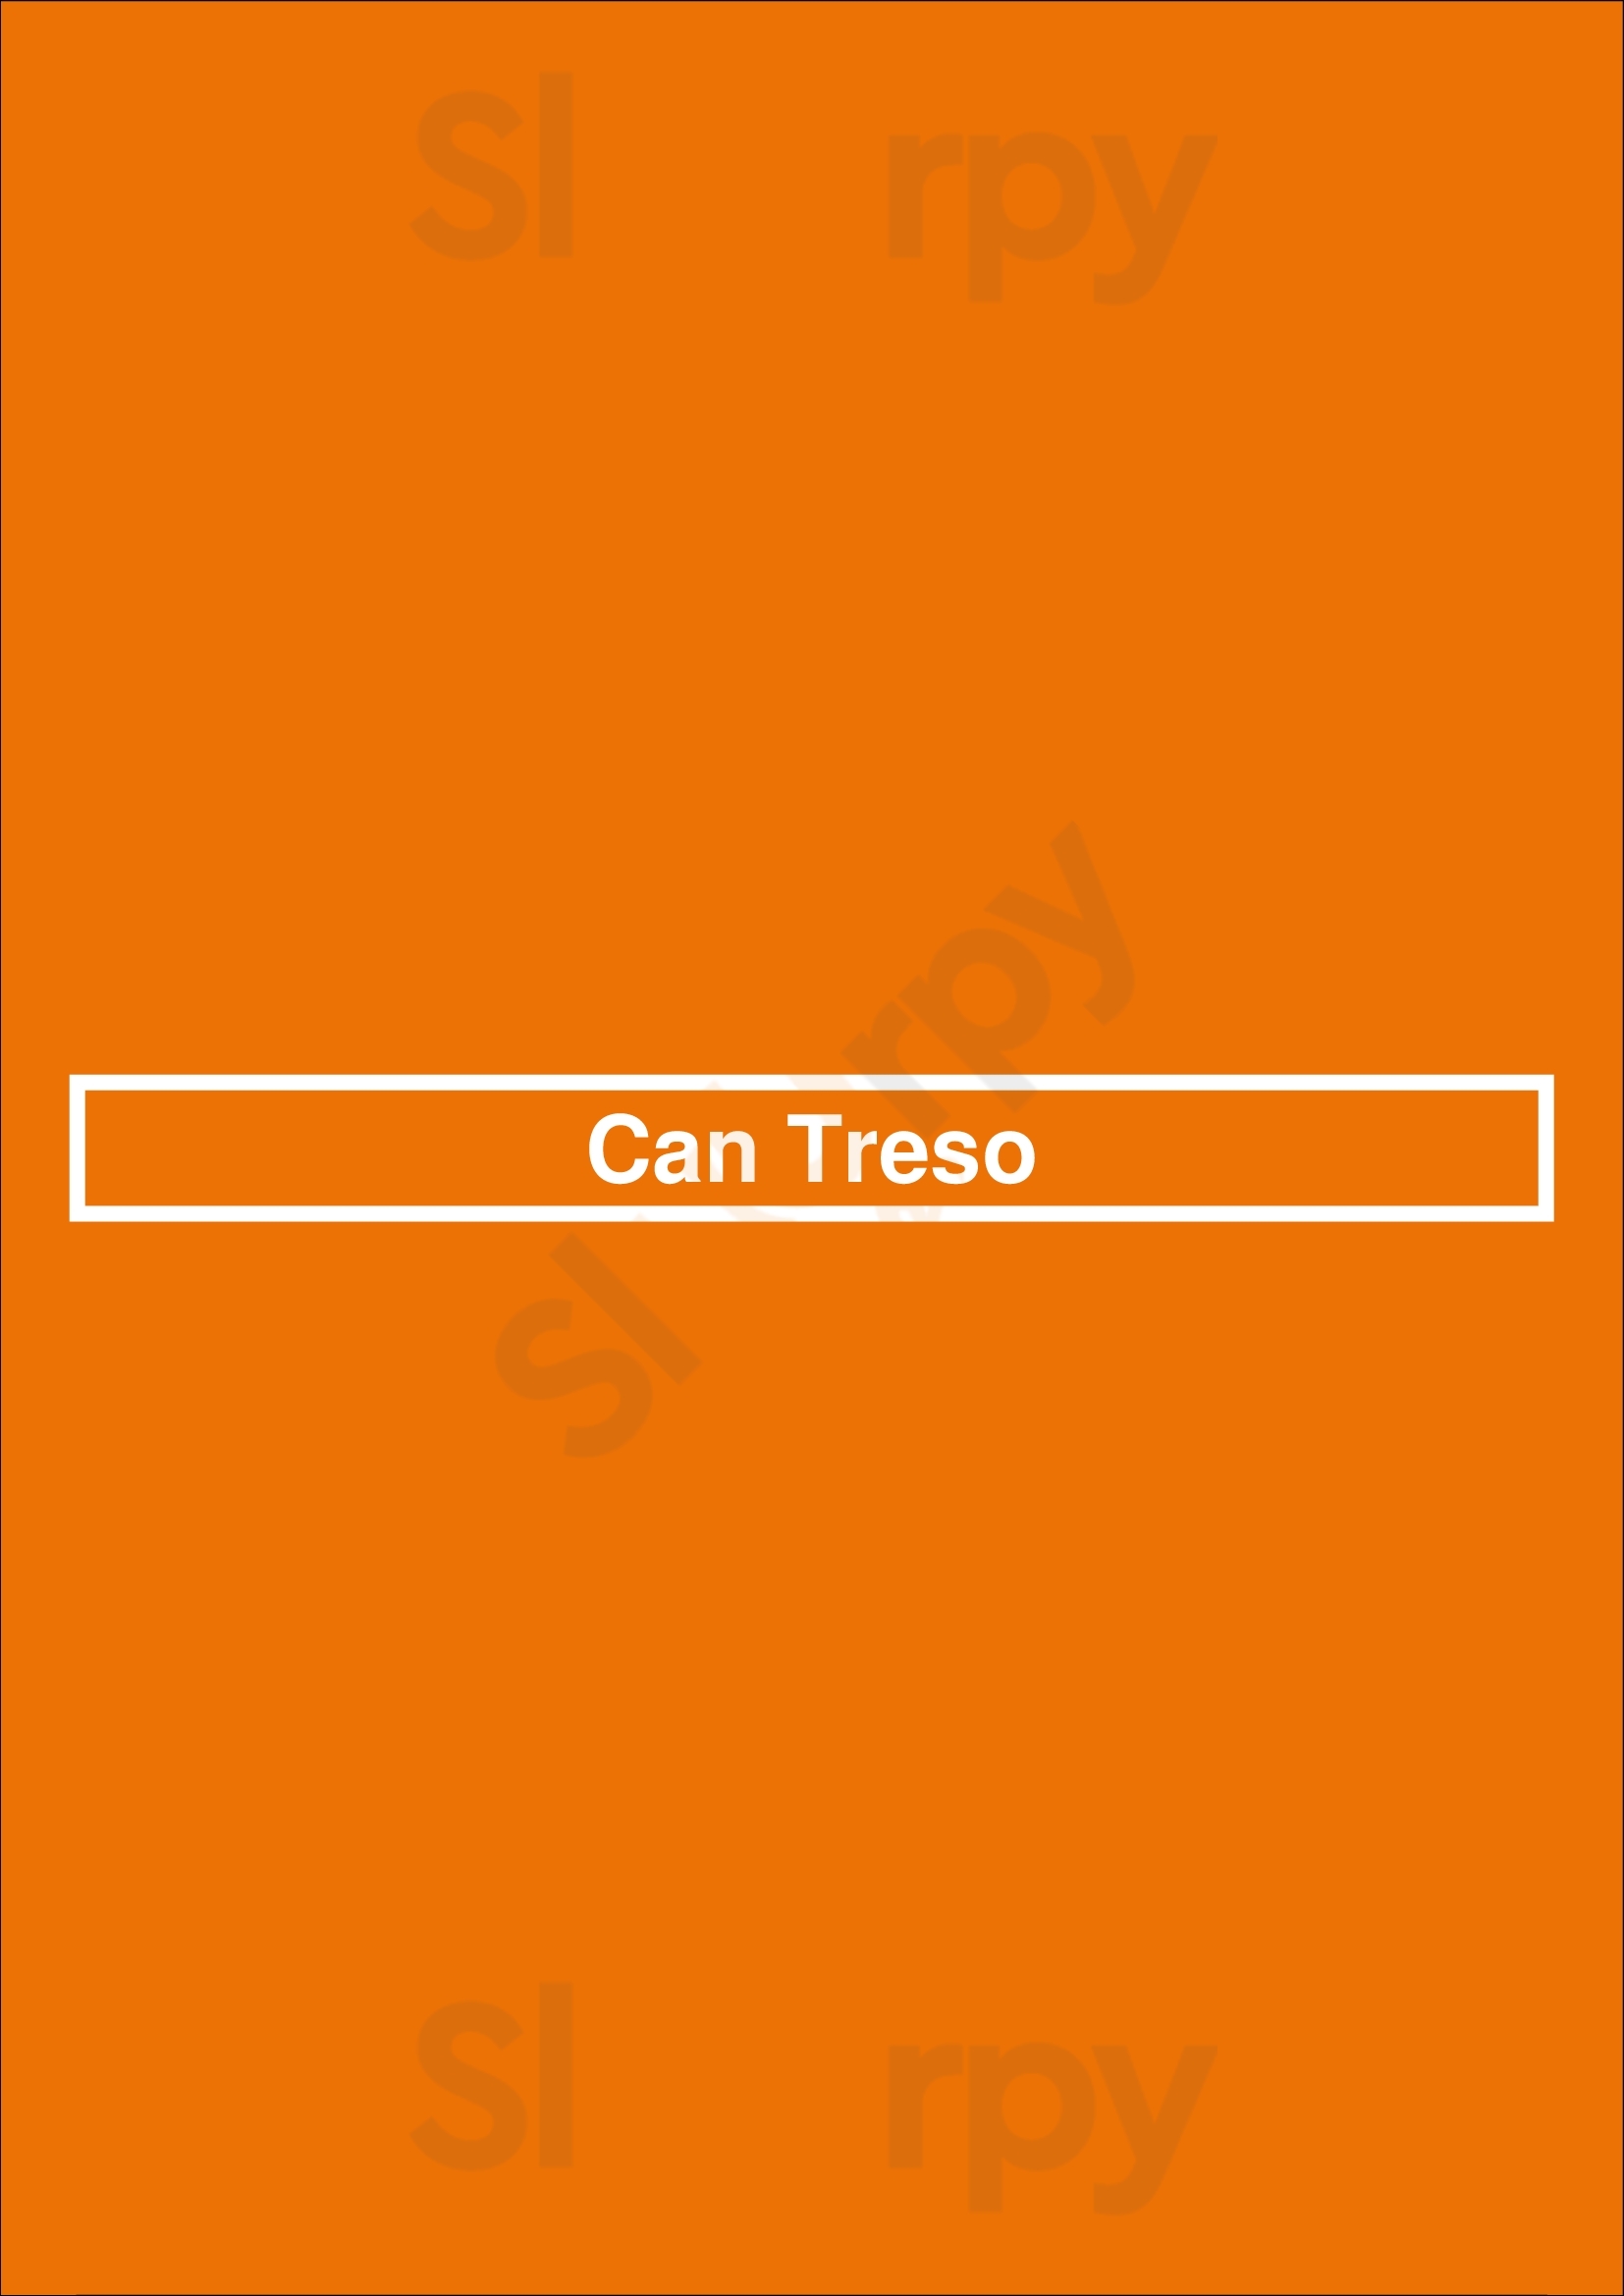 Can Treso Barcelona Menu - 1